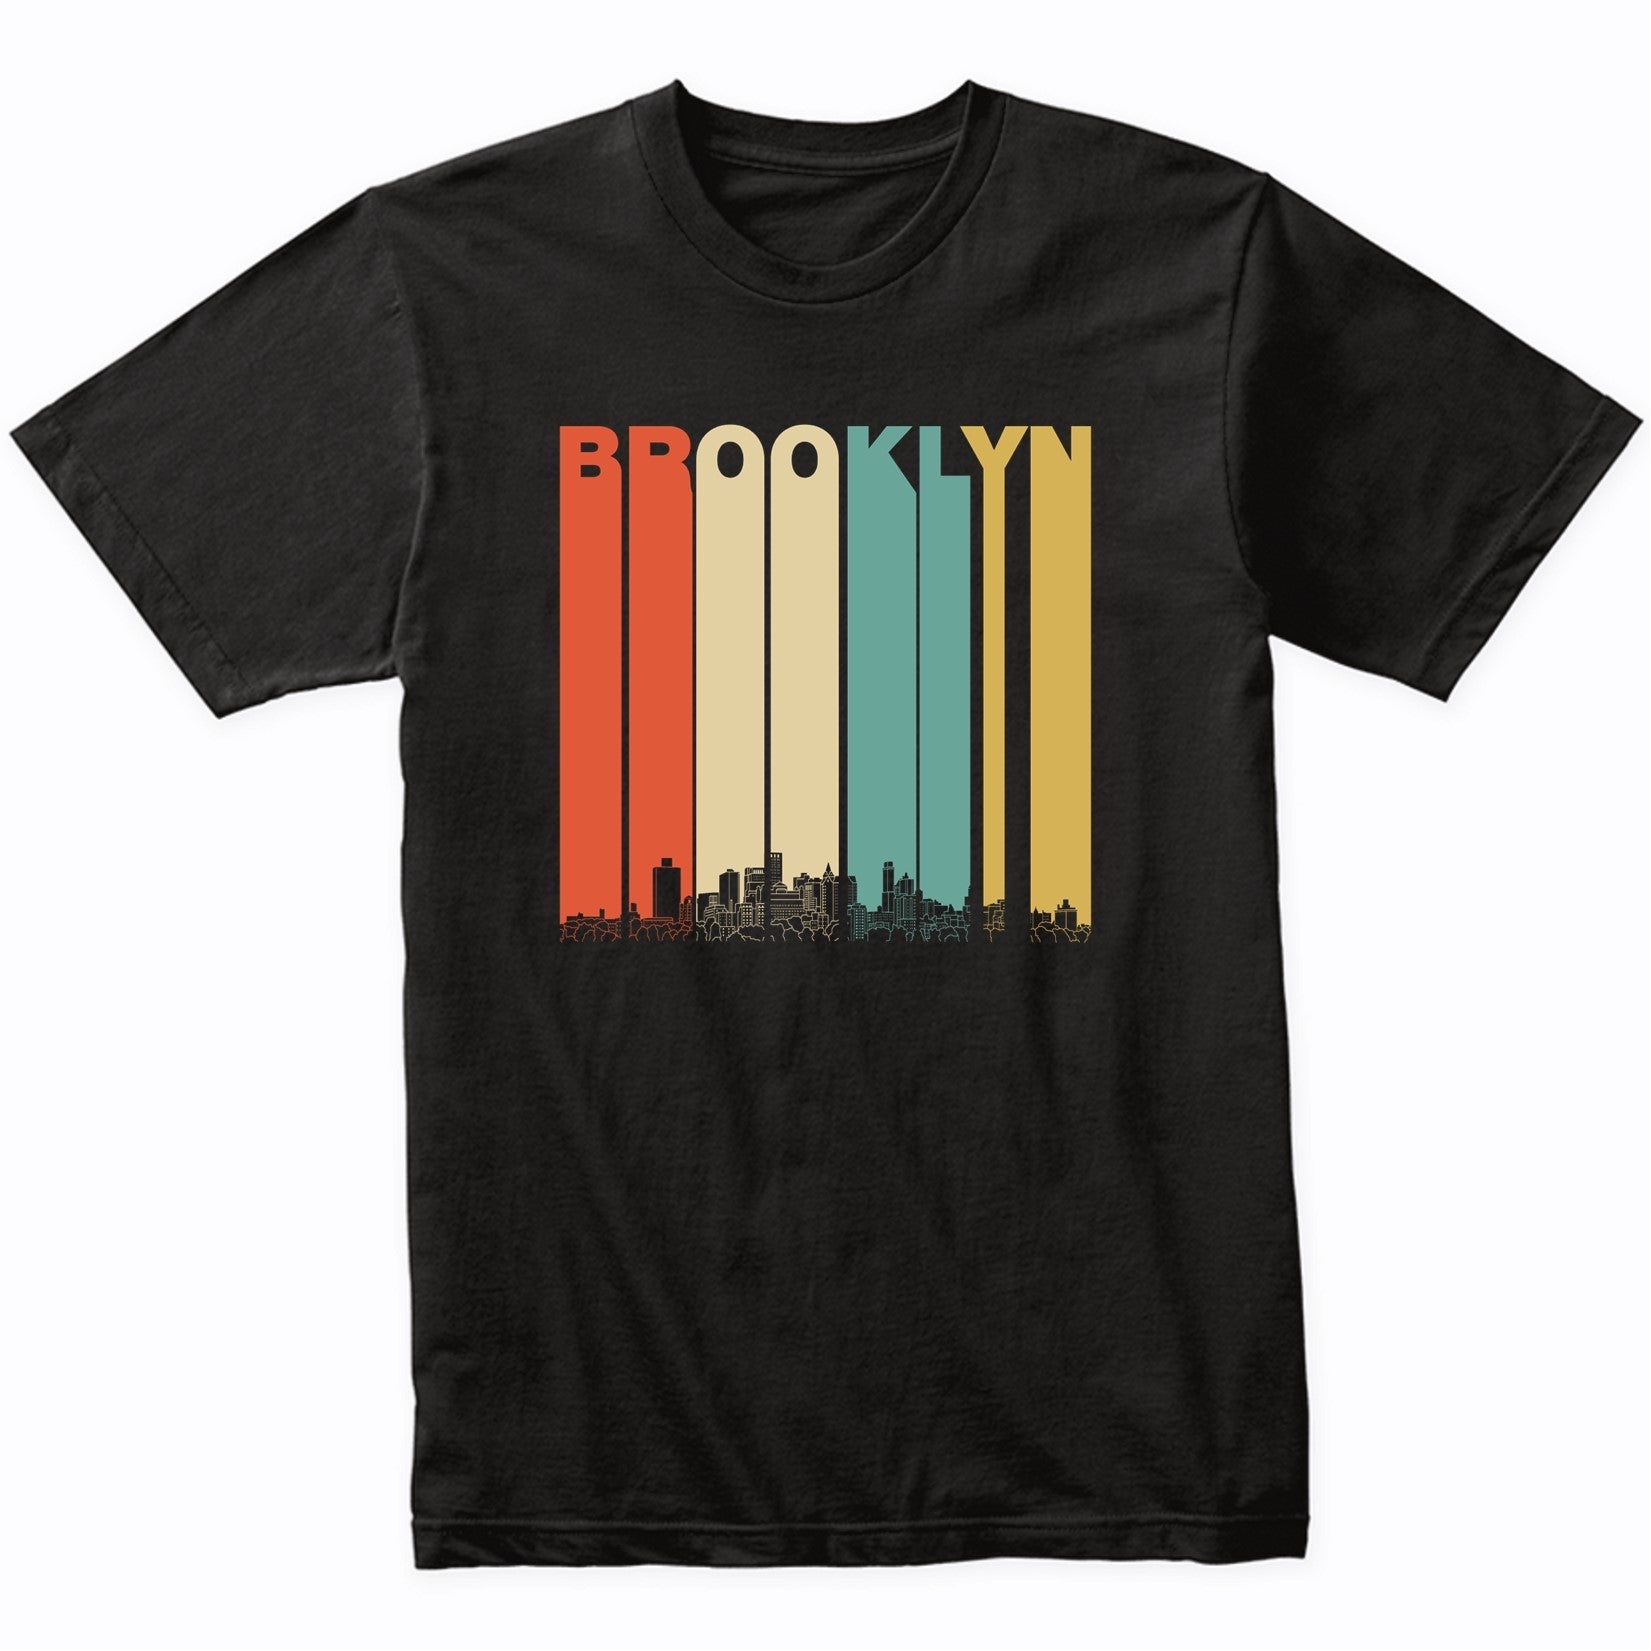 Vintage 1970's Style Brooklyn New York Skyline T-Shirt